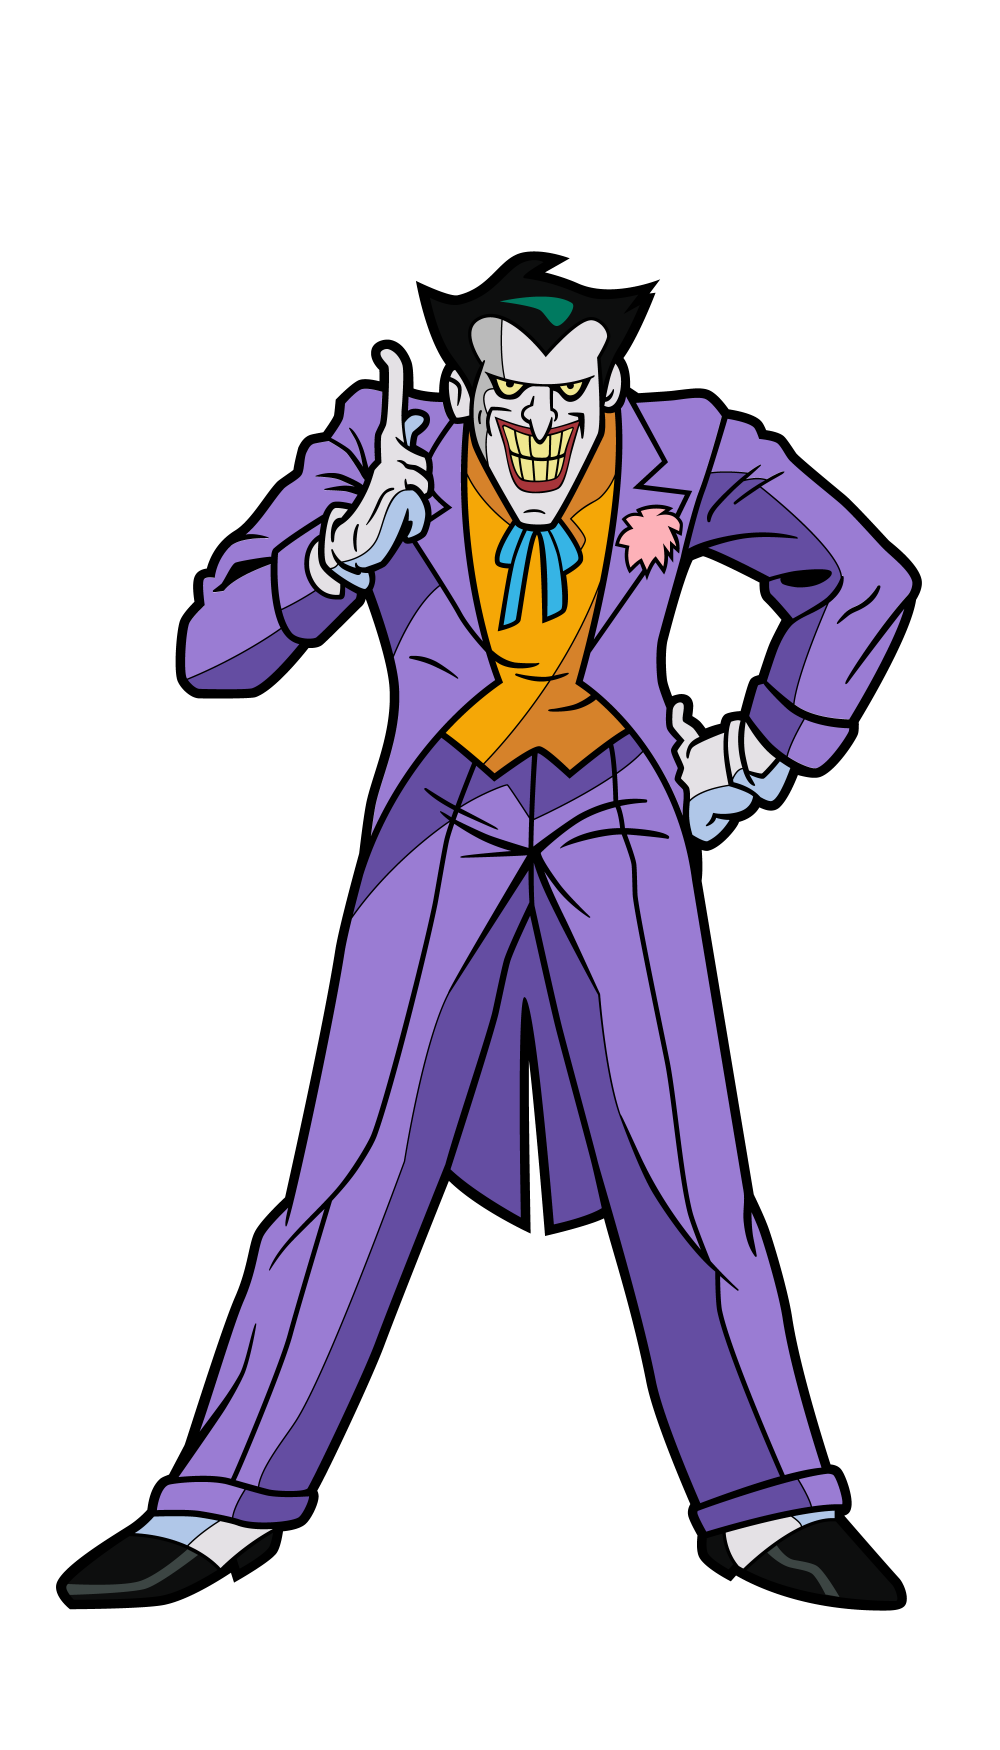 Batman The Animated Series: The Joker FiGPiN #480